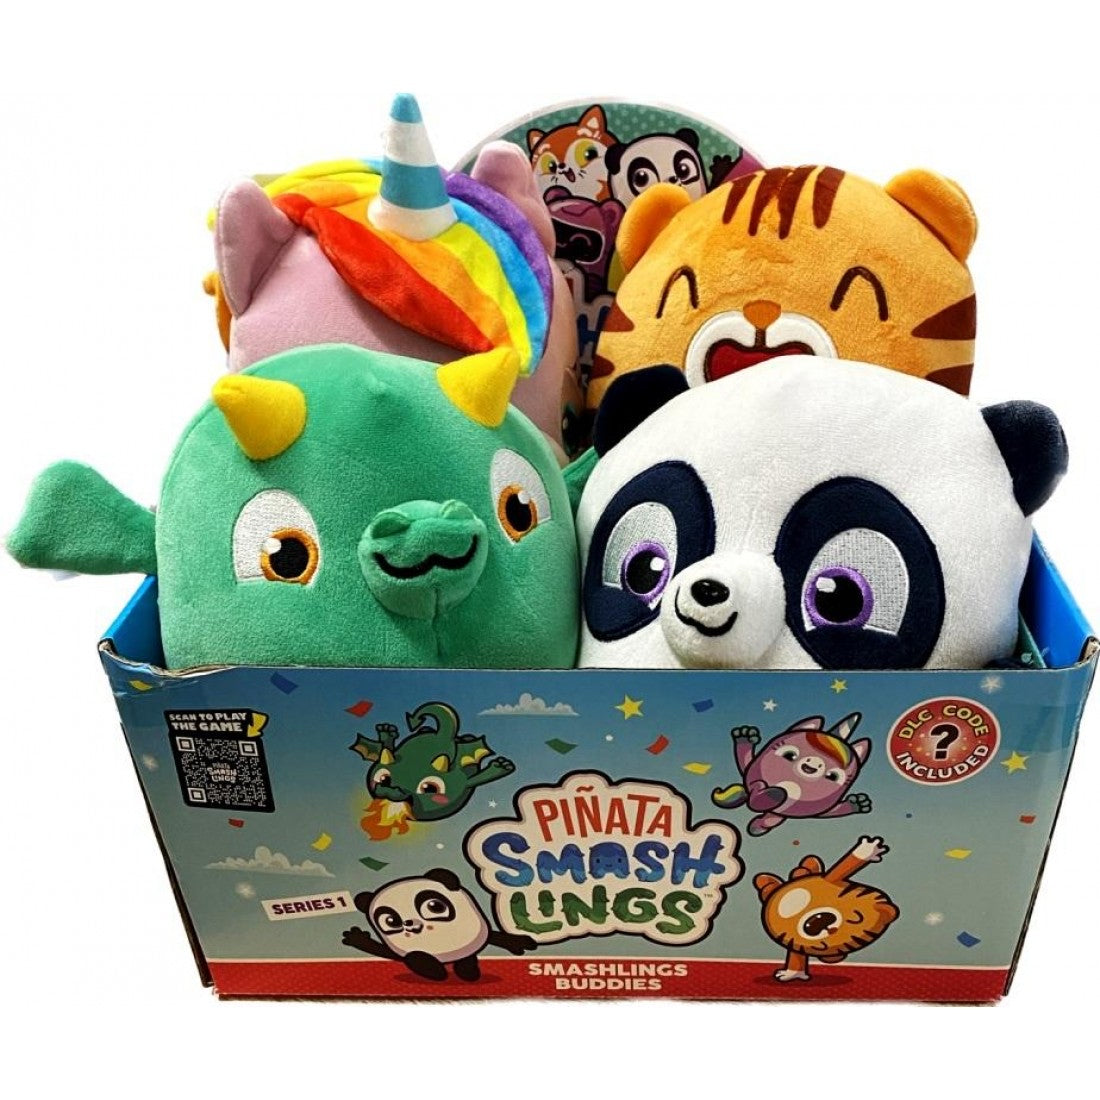 Piñata Smashlings Plush Buddies Blush the Green Dragon 18cm Soft Toy